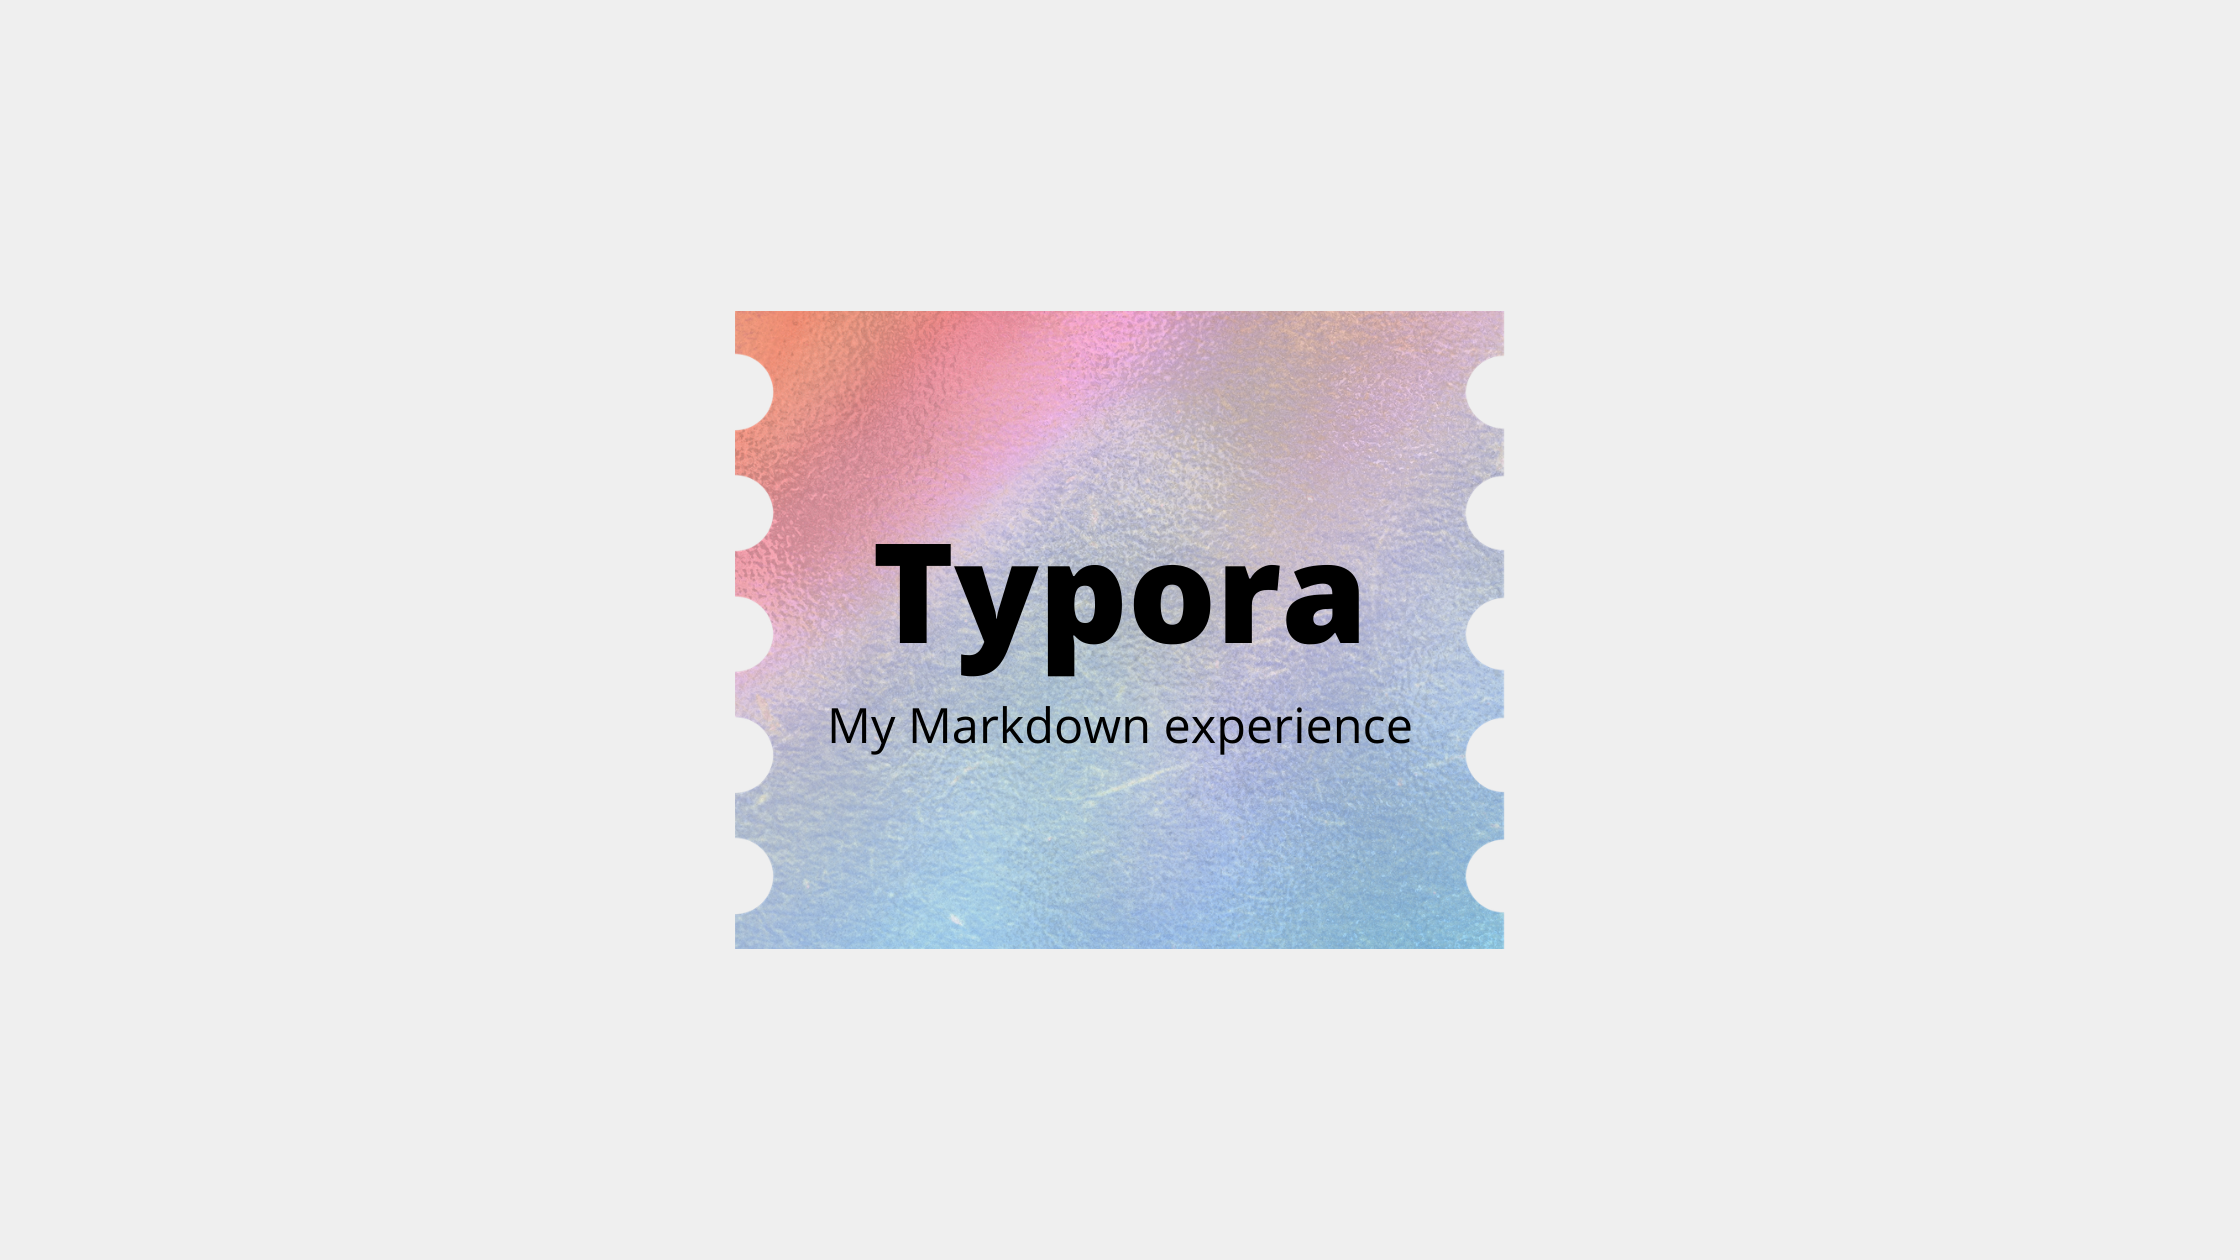 Typora, my Markdown experience